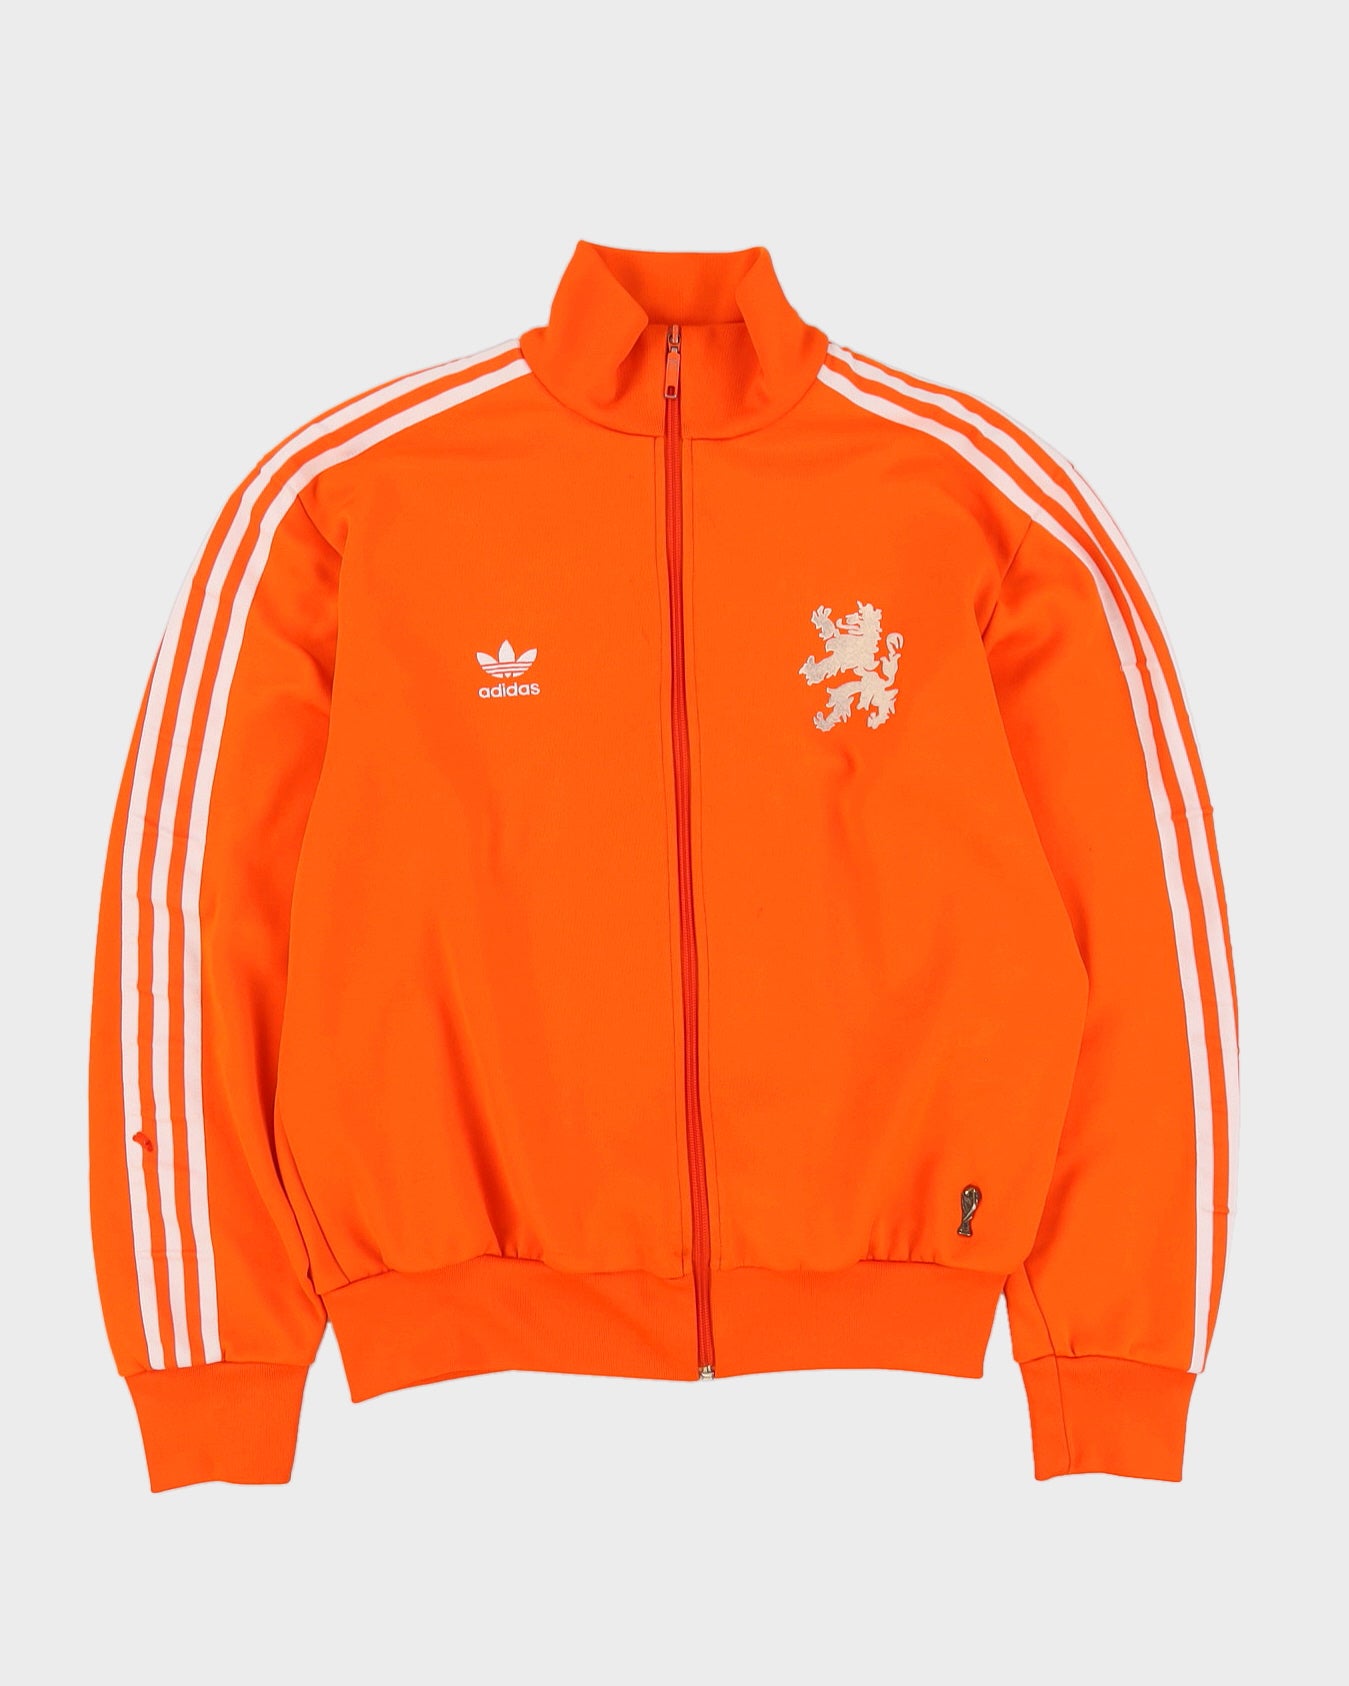 Ijveraar Dialoog Schandalig Adidas Orange 1974 Repro Holland Netherlands Orange Track Jacket - L – Rokit